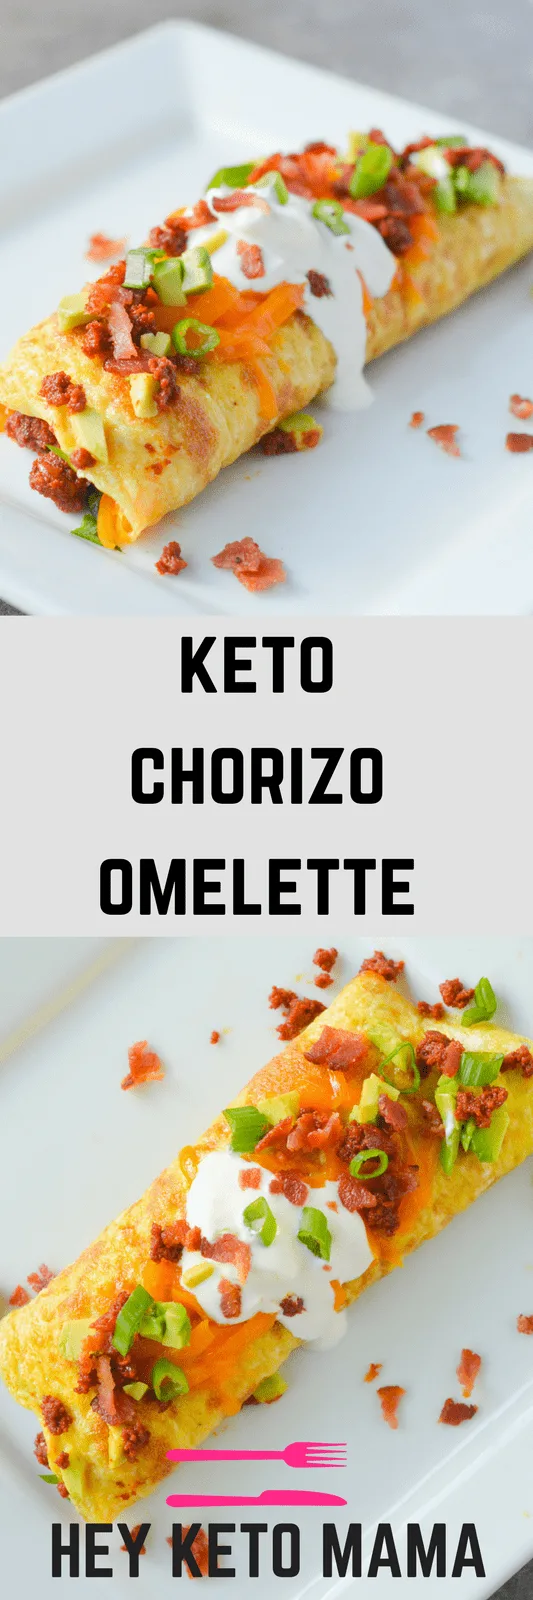 Tired of eating eggs? This Keto Chorizo Omelette will make your breakfast egg-citing again! | heyketomama.com